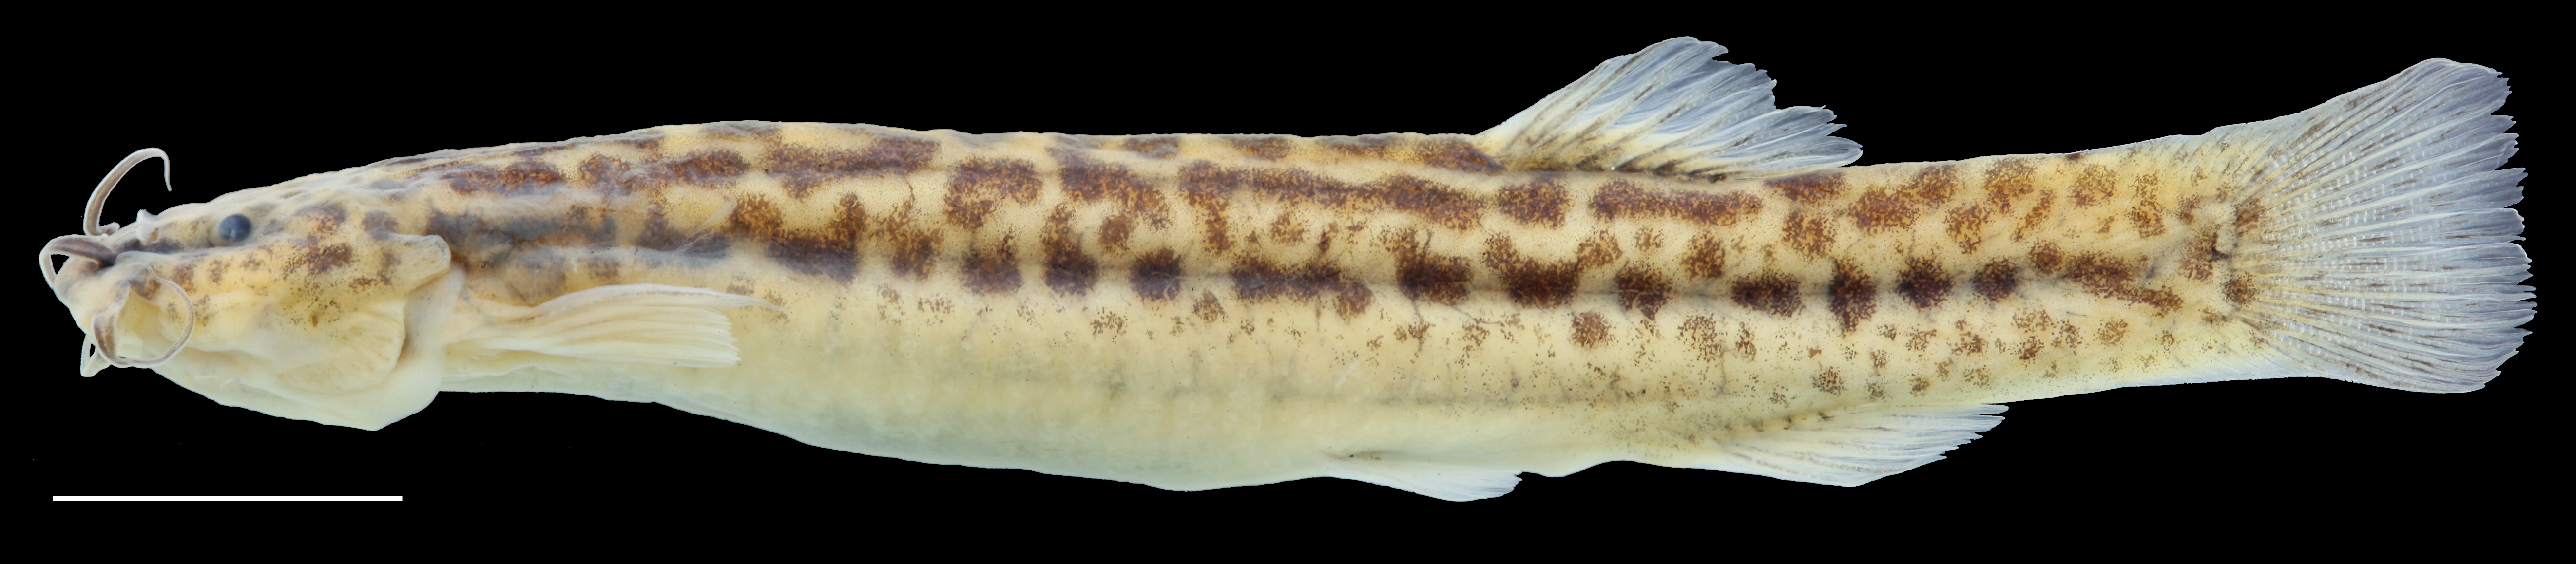 Paratype of <em>Trichomycterus torcoromaensis</em>, IAvH-P-13422_Lateral, 62.2 mm SL (scale bar = 1 cm). Photograph by C. DoNascimiento